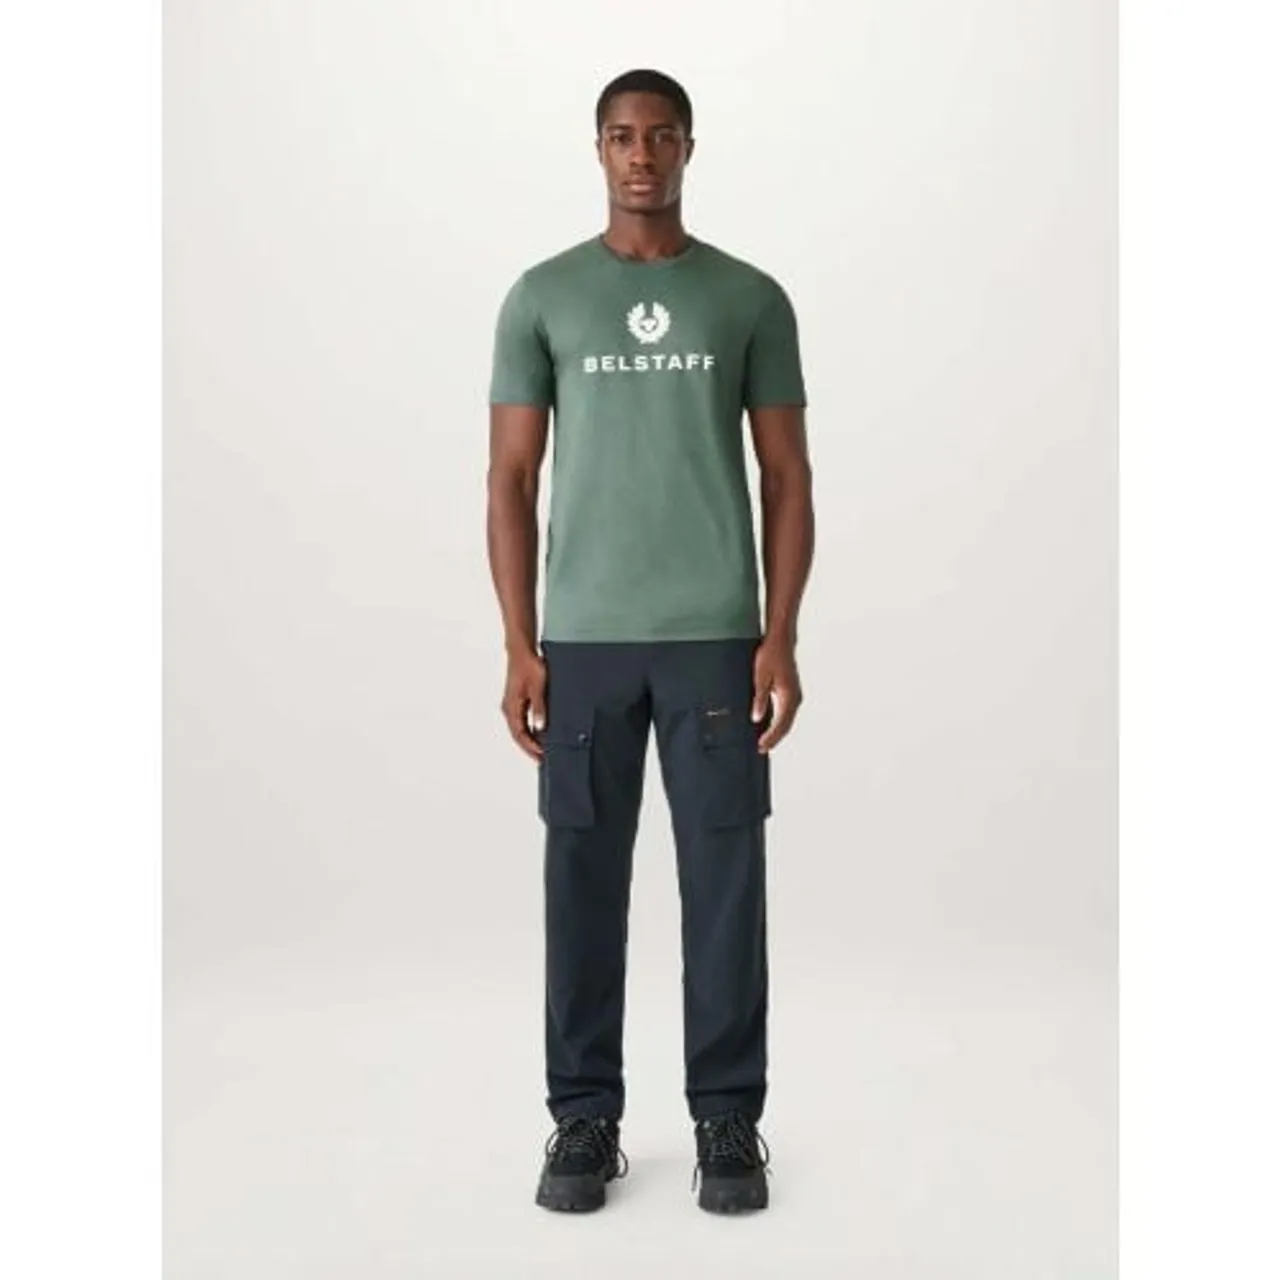 Belstaff Mens Mineral Green Signature T-Shirt